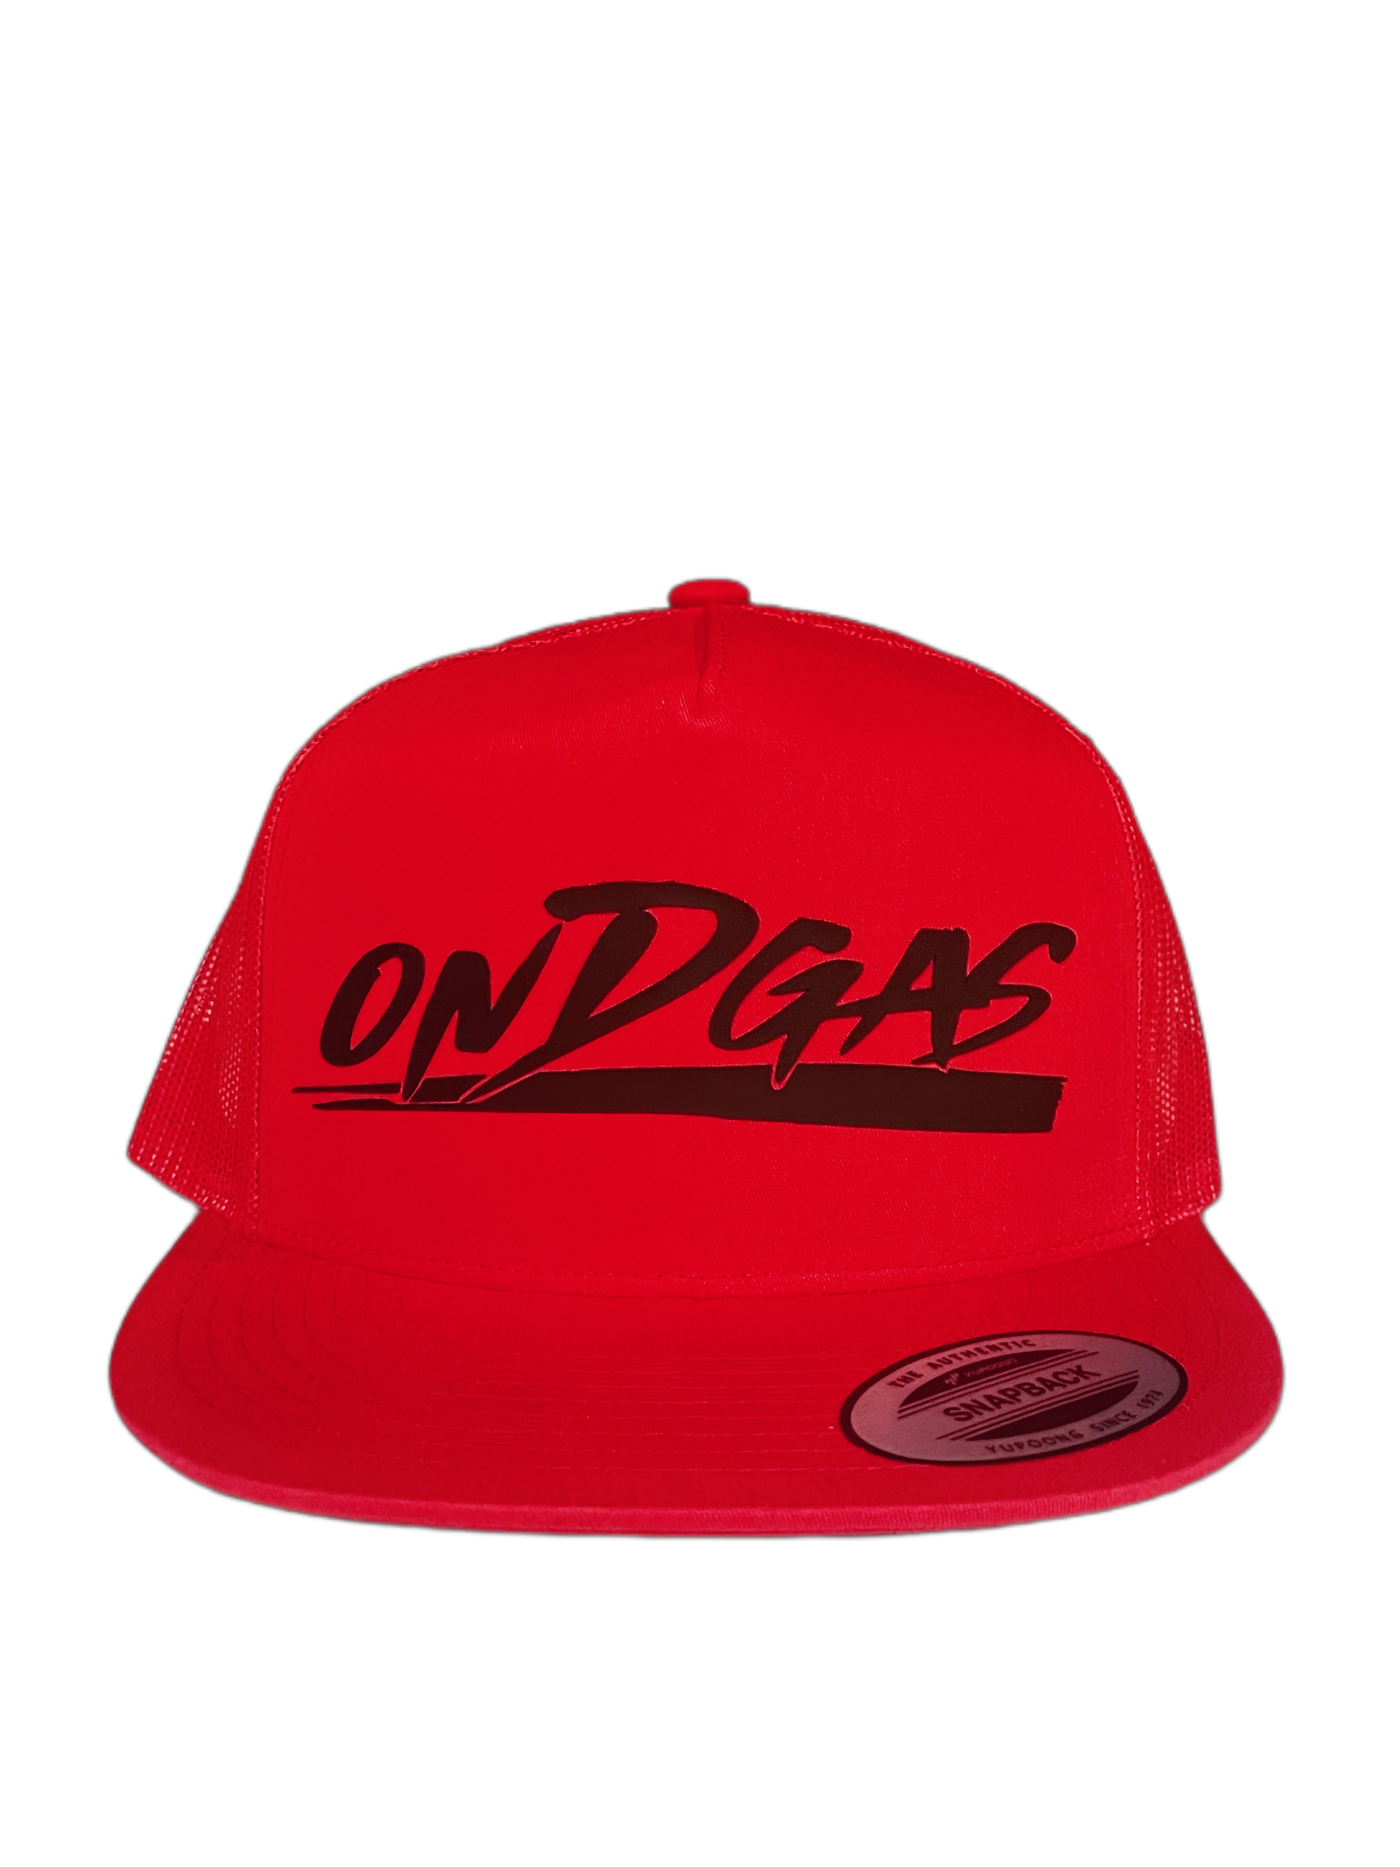 Red Snapback - Black ONDGAS Rubber logo